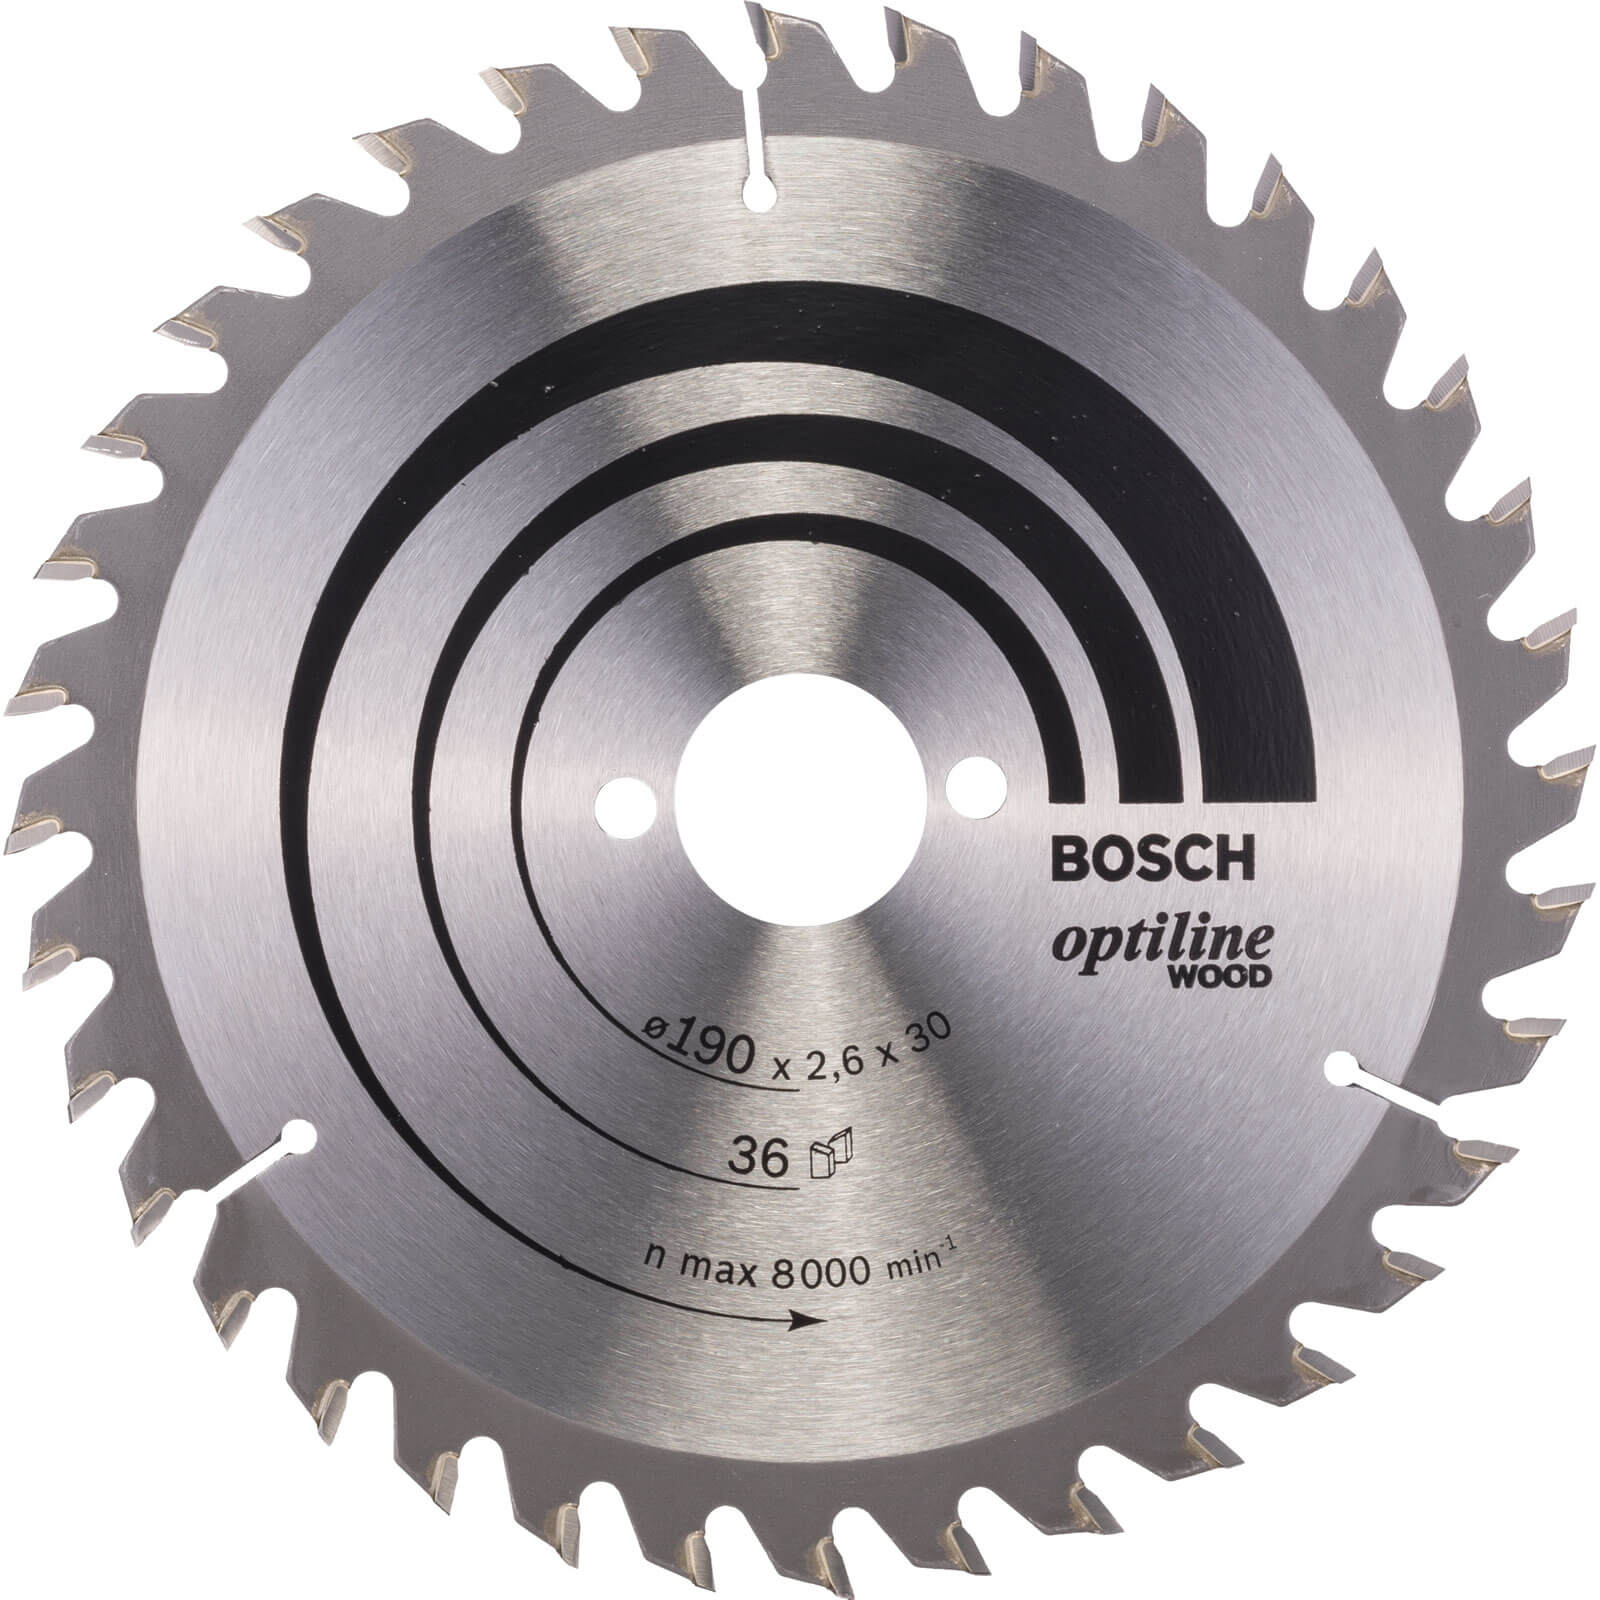 Image of Bosch Optiline Wood Cutting Saw Blade 190mm 36T 30mm